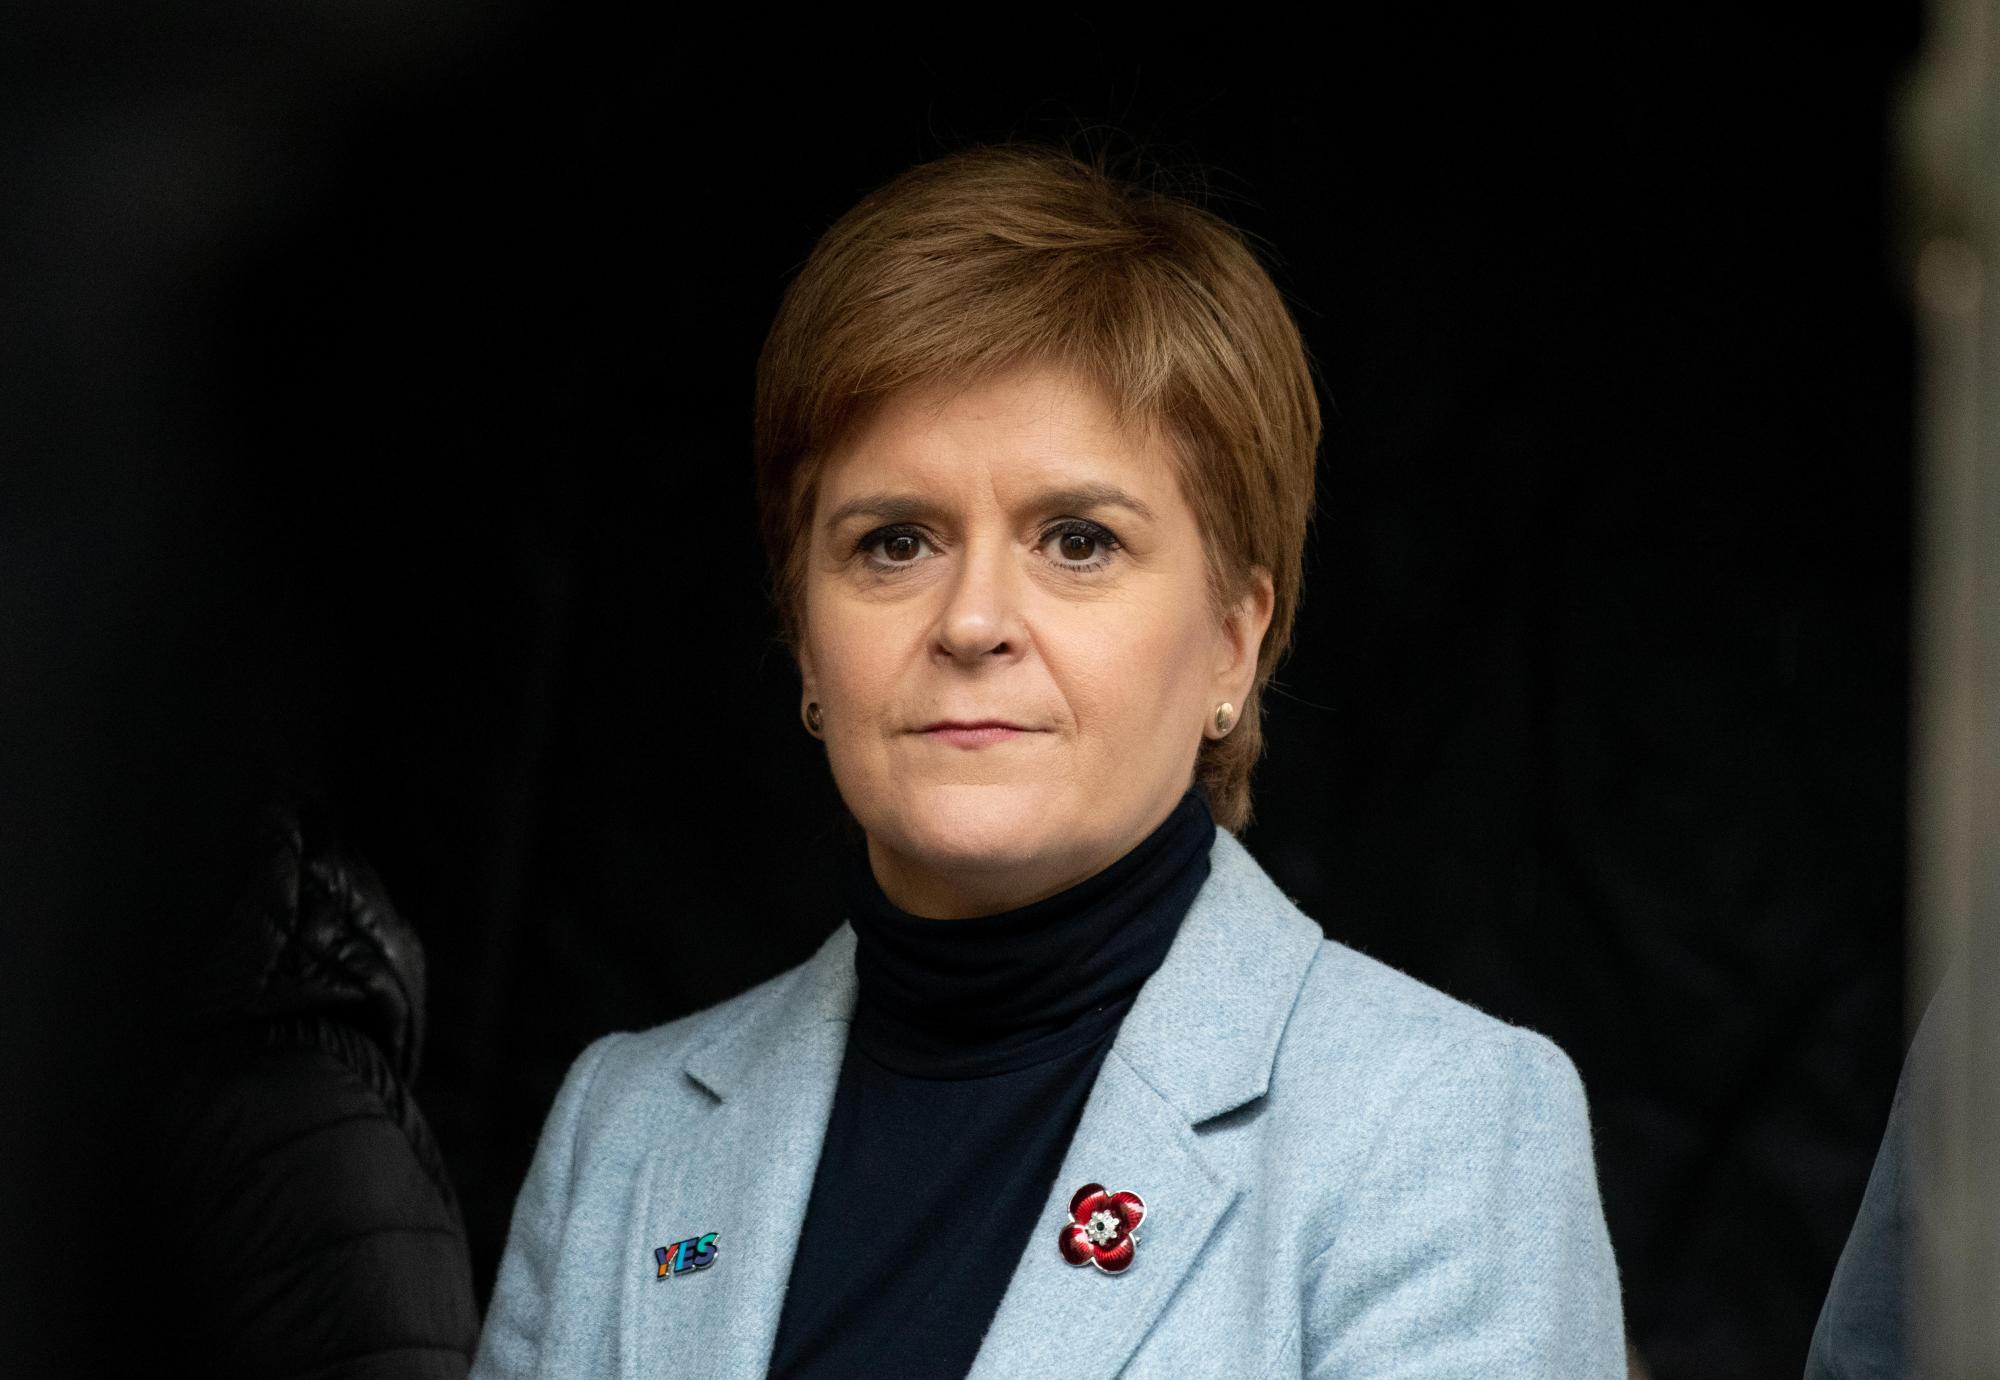 Nicola Sturgeon, outgoing Scottish First Minster